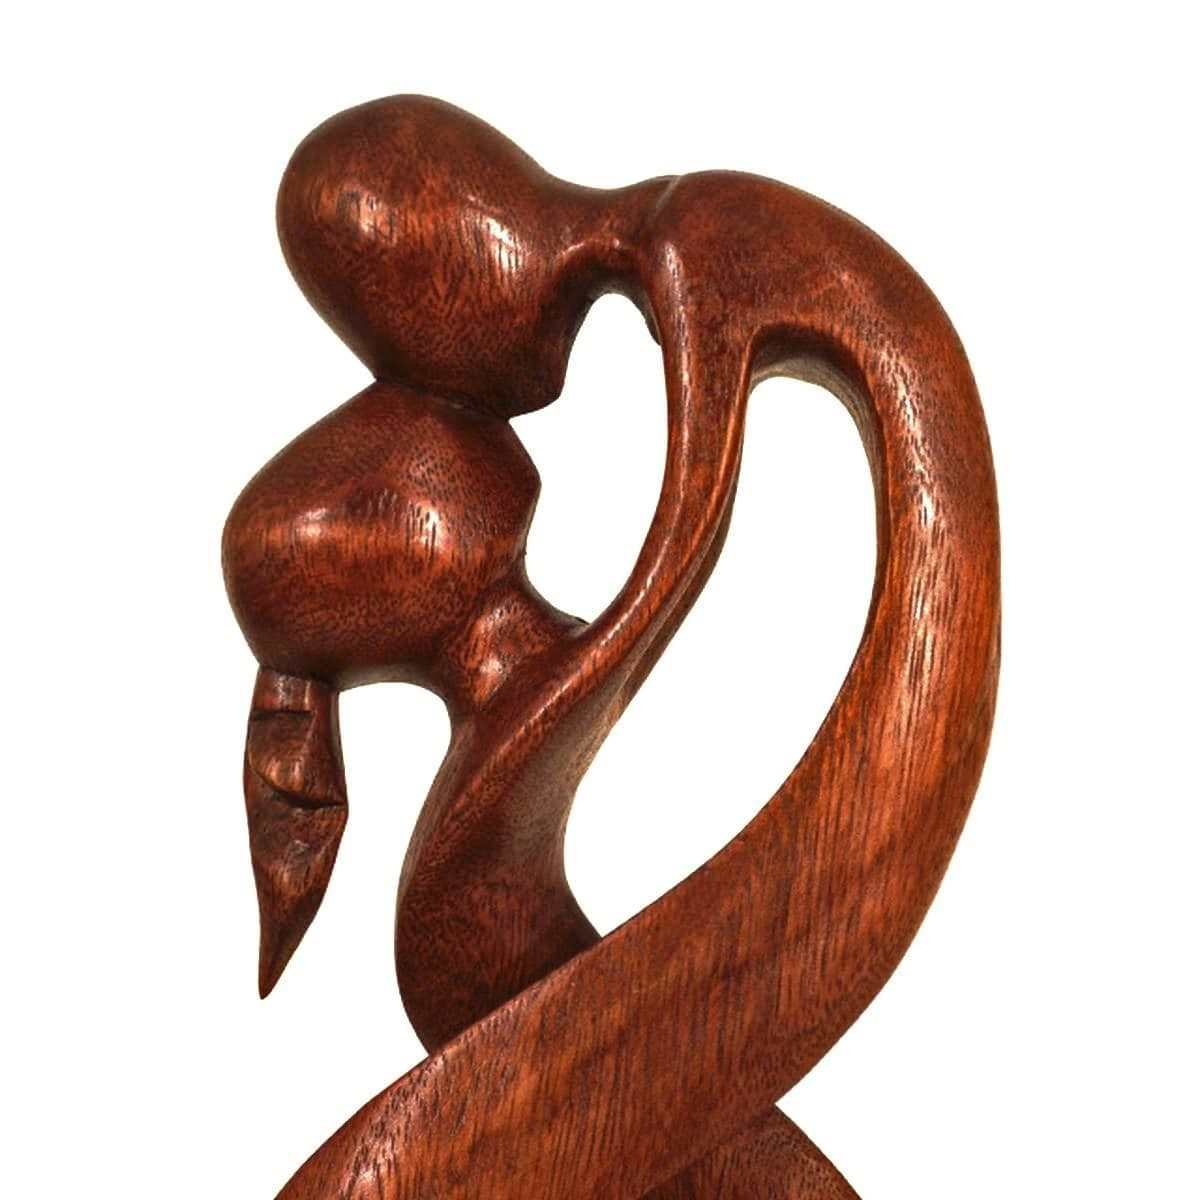 Holz Figur Skulptur Abstrakt Holzfigur Statue Afrika Asia Handarbeit Deko Hingabe